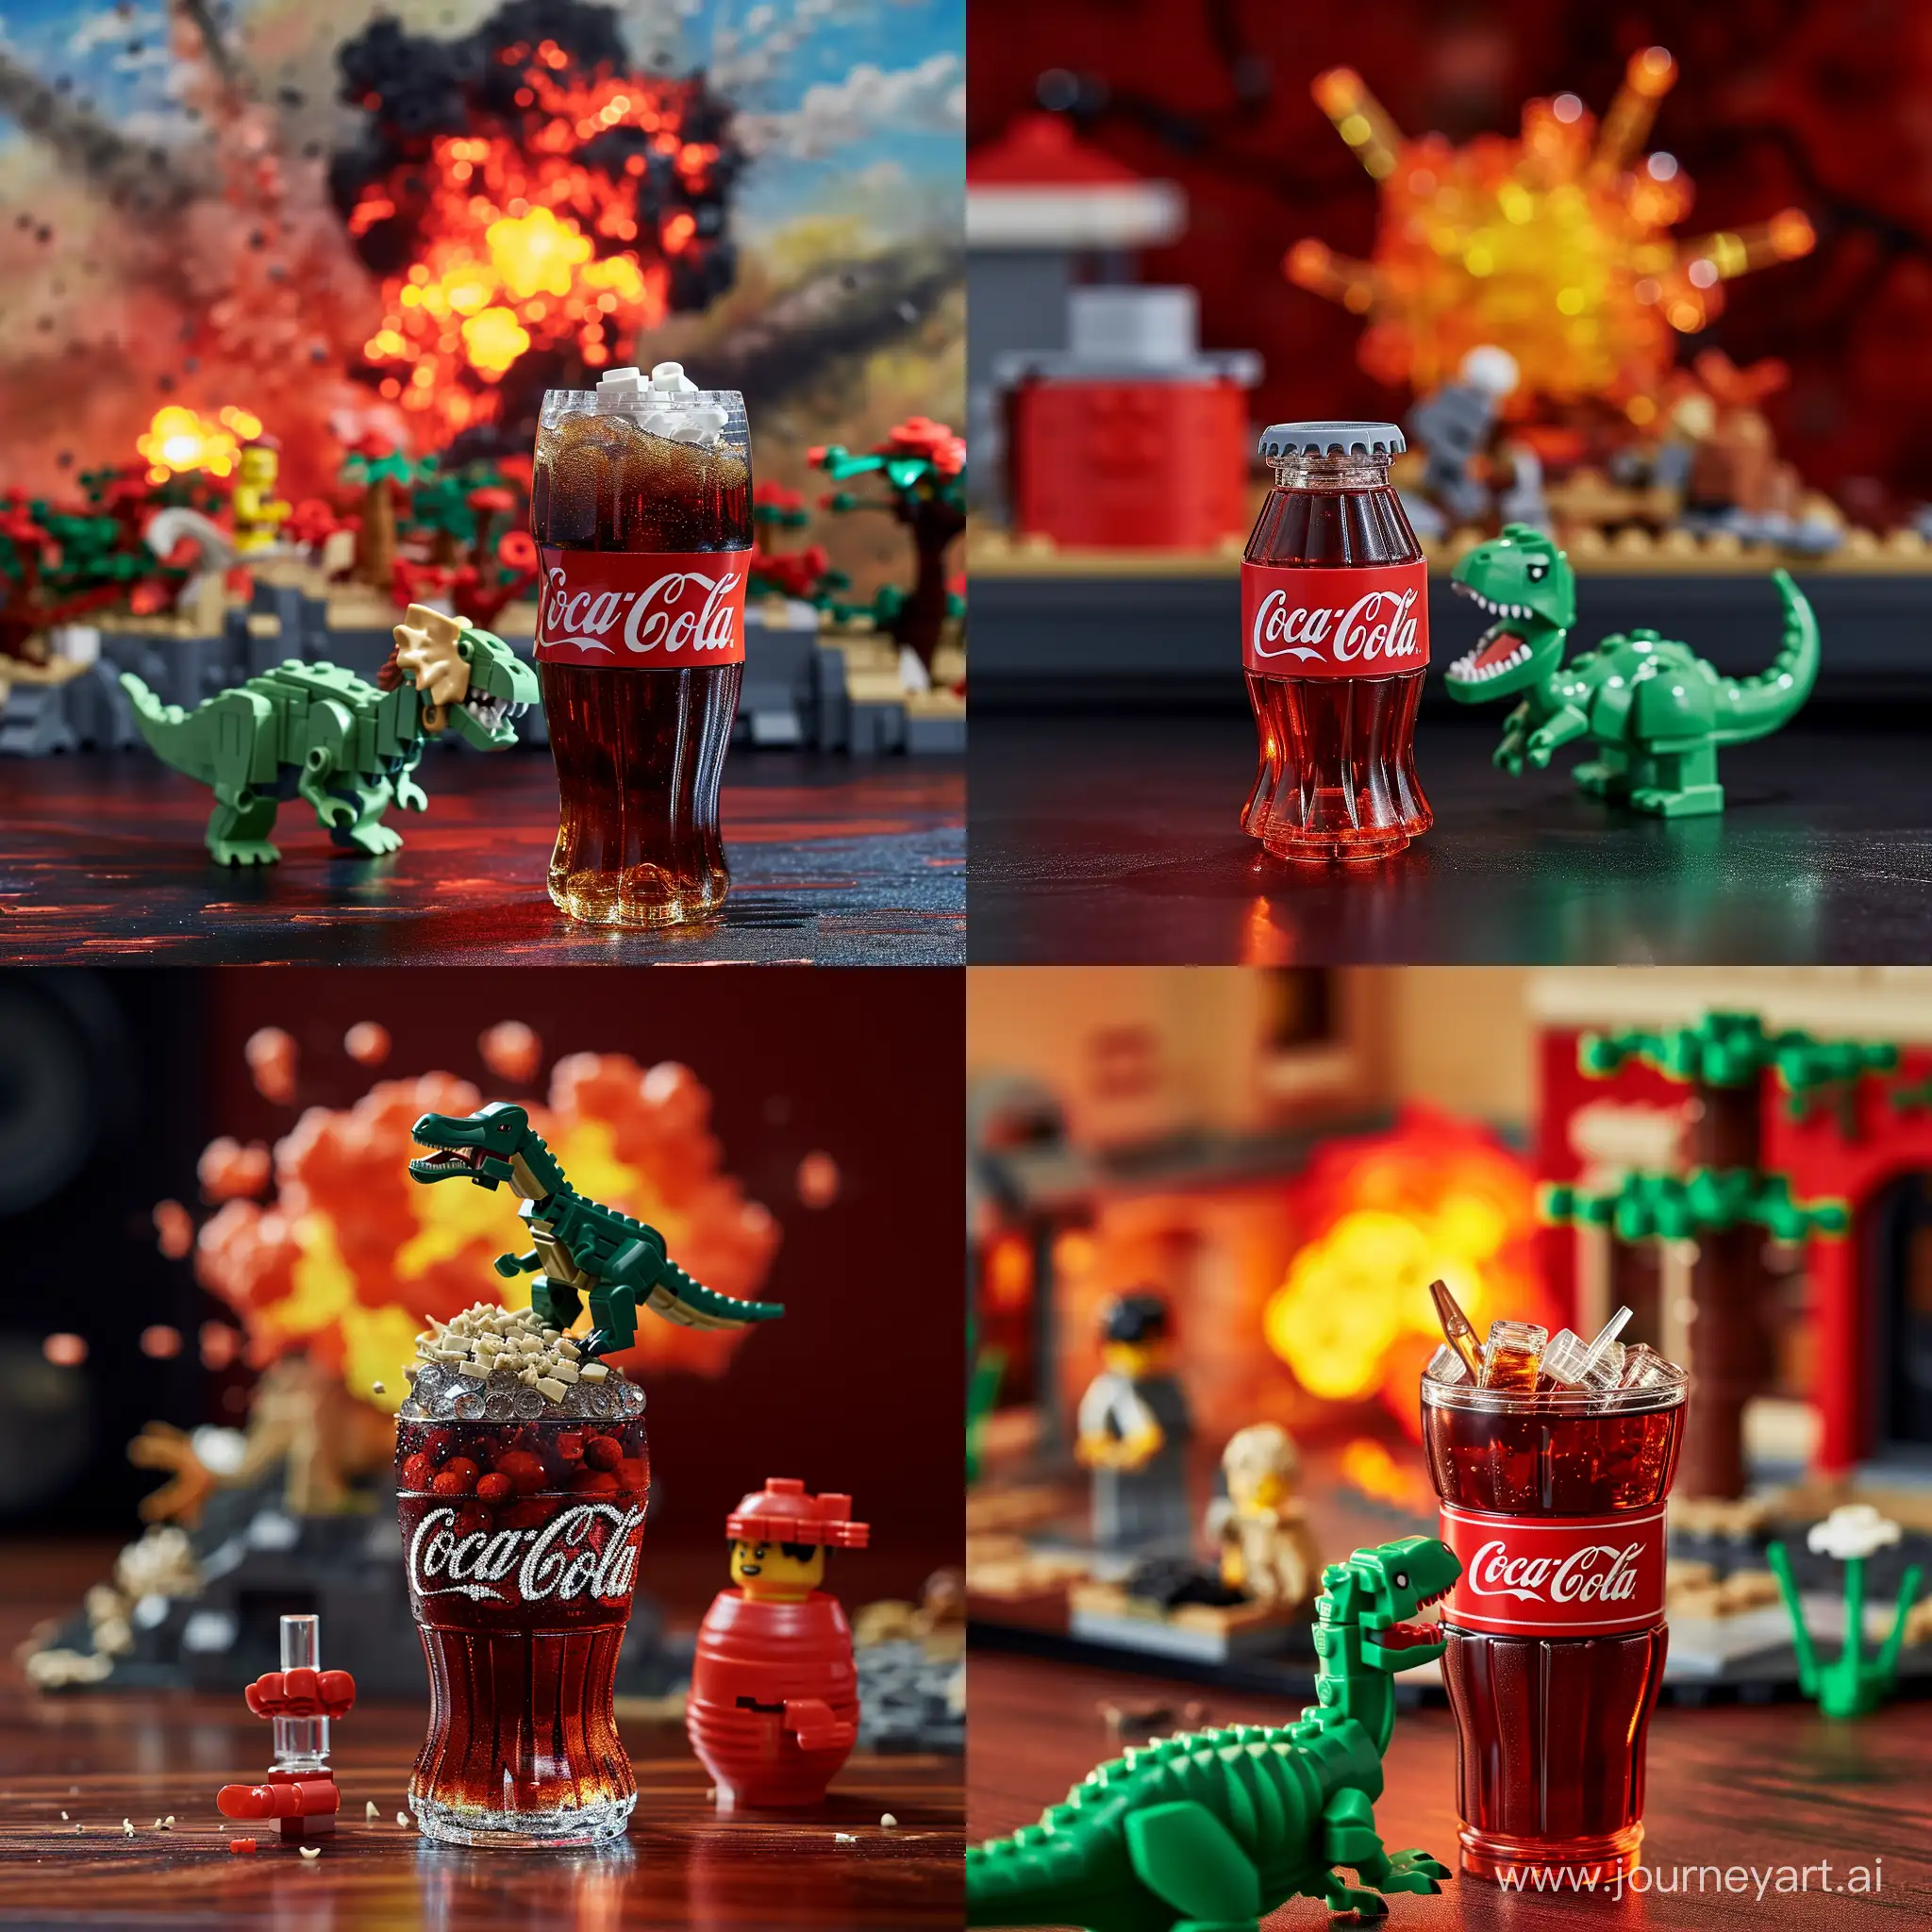 Refreshing-CocaCola-Encounter-with-LEGO-Dinosaur-Amid-Explosive-Scene